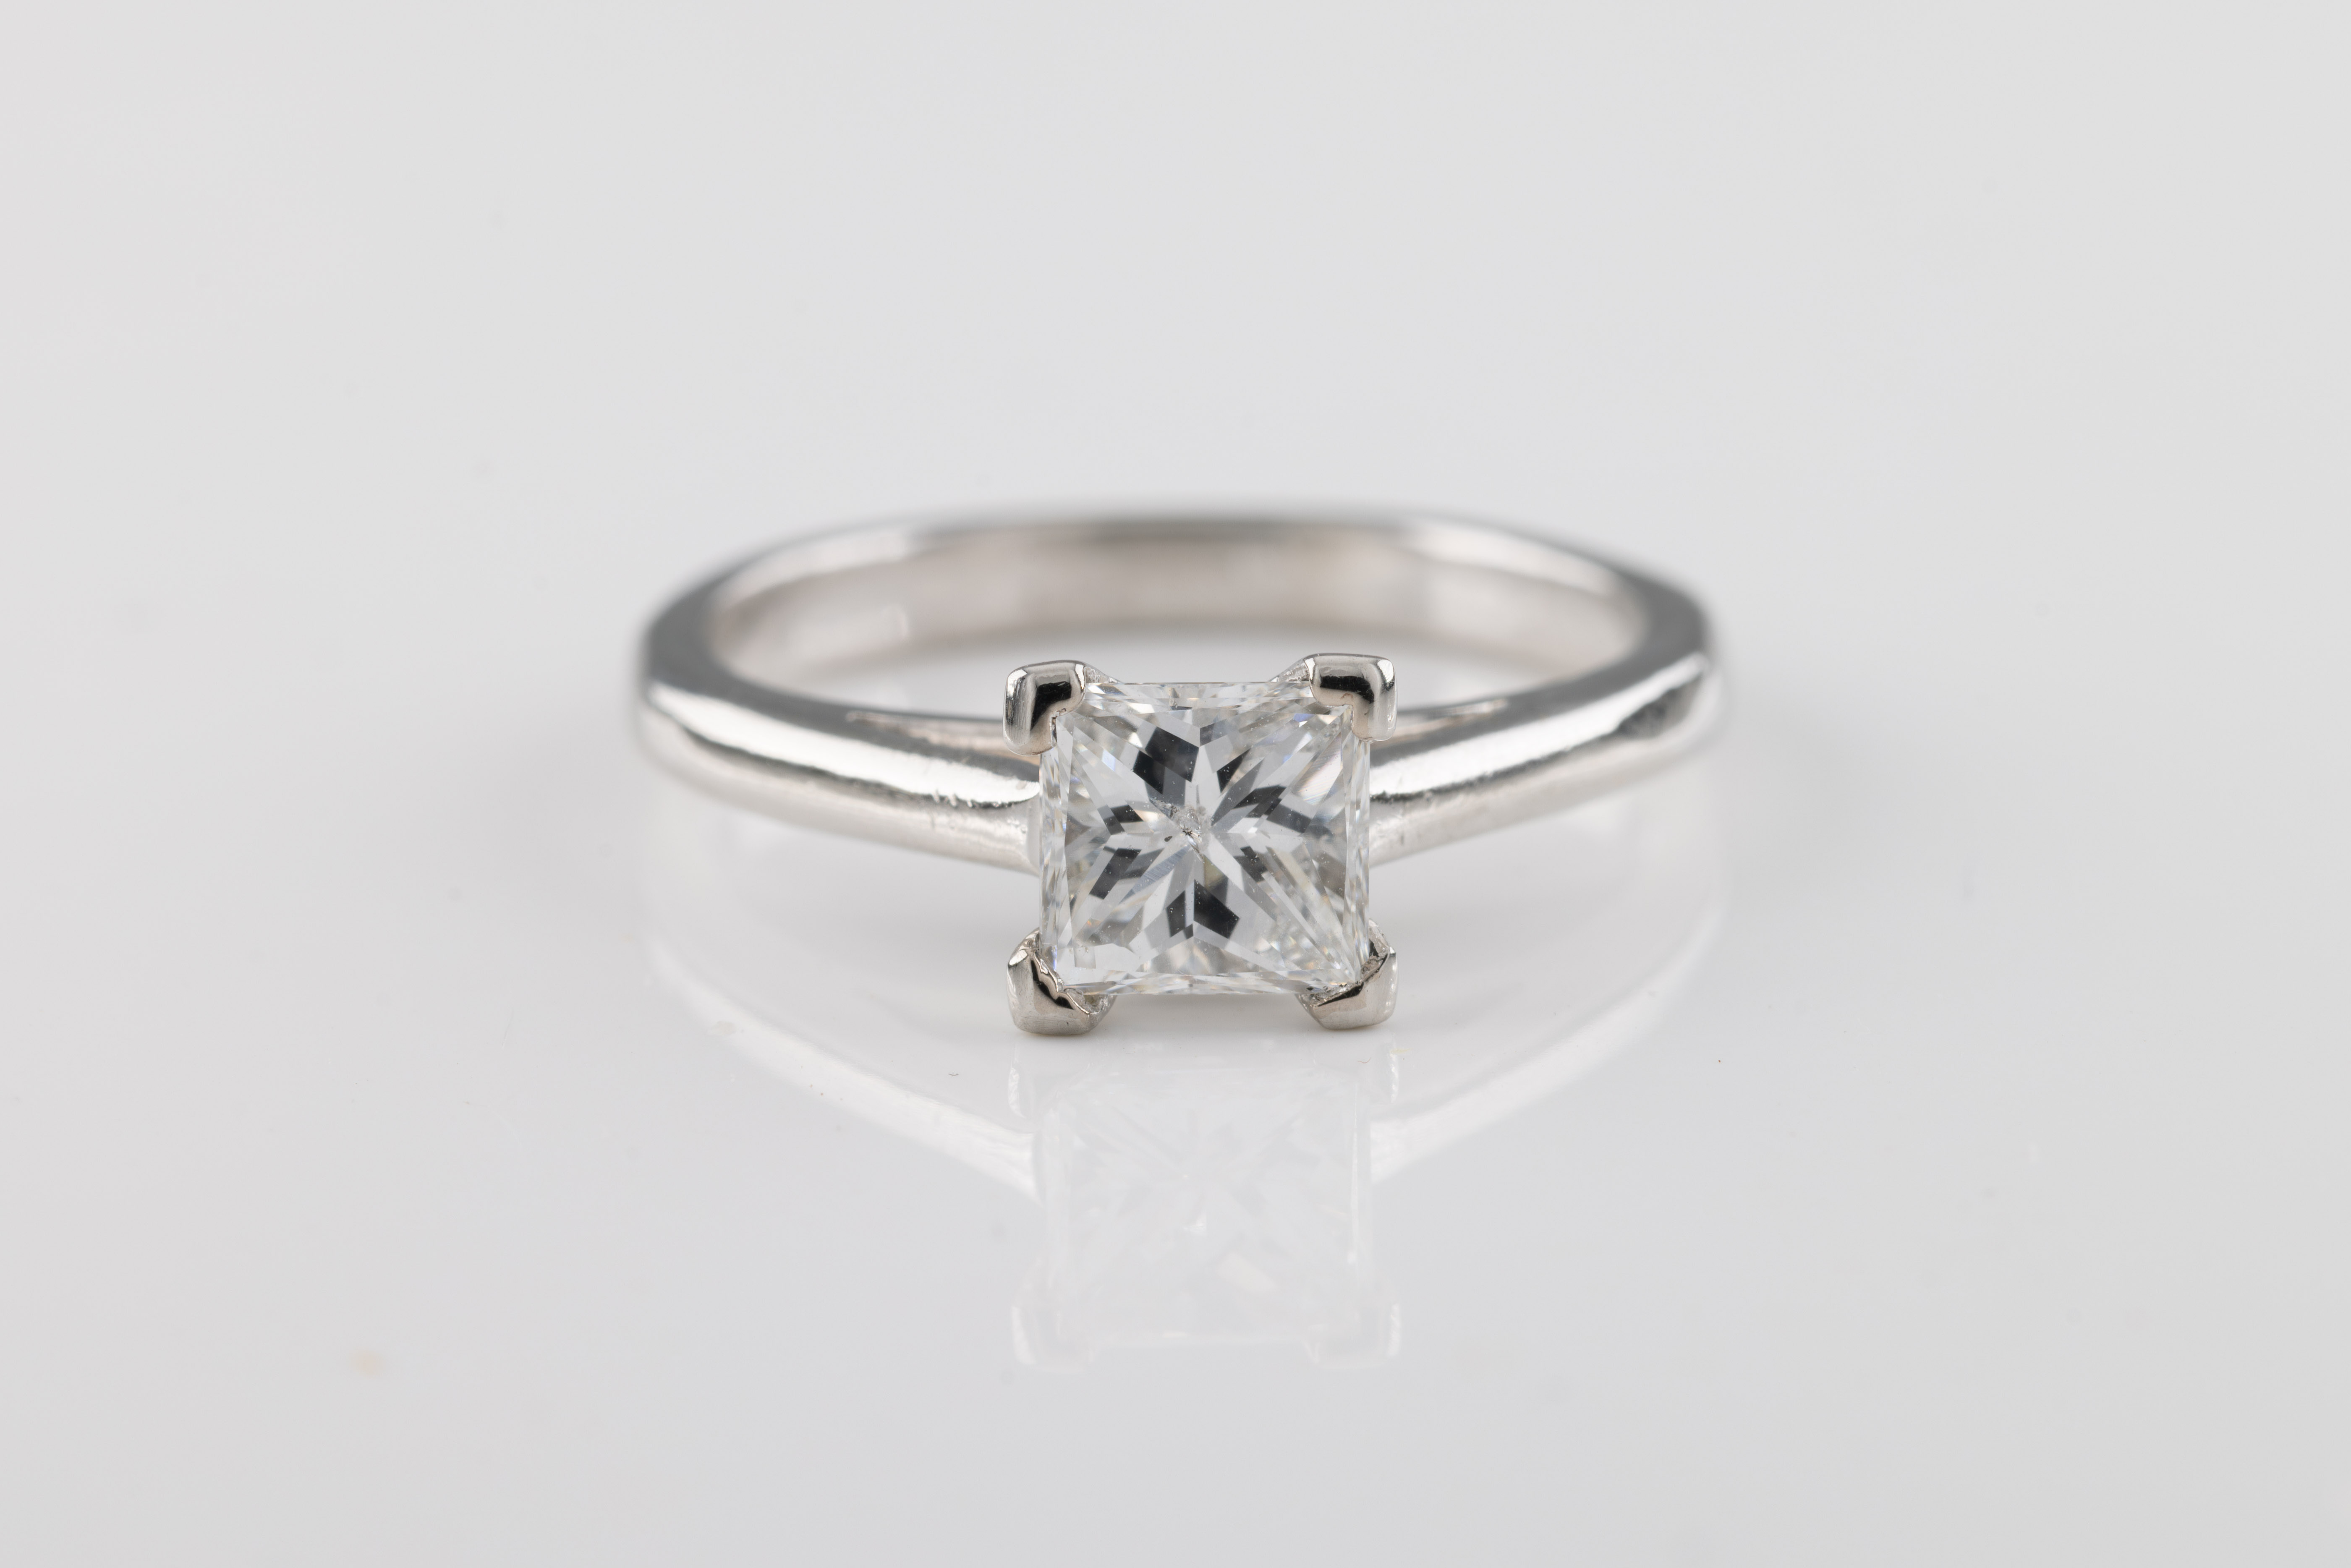 A princess-cut diamond solitaire ring